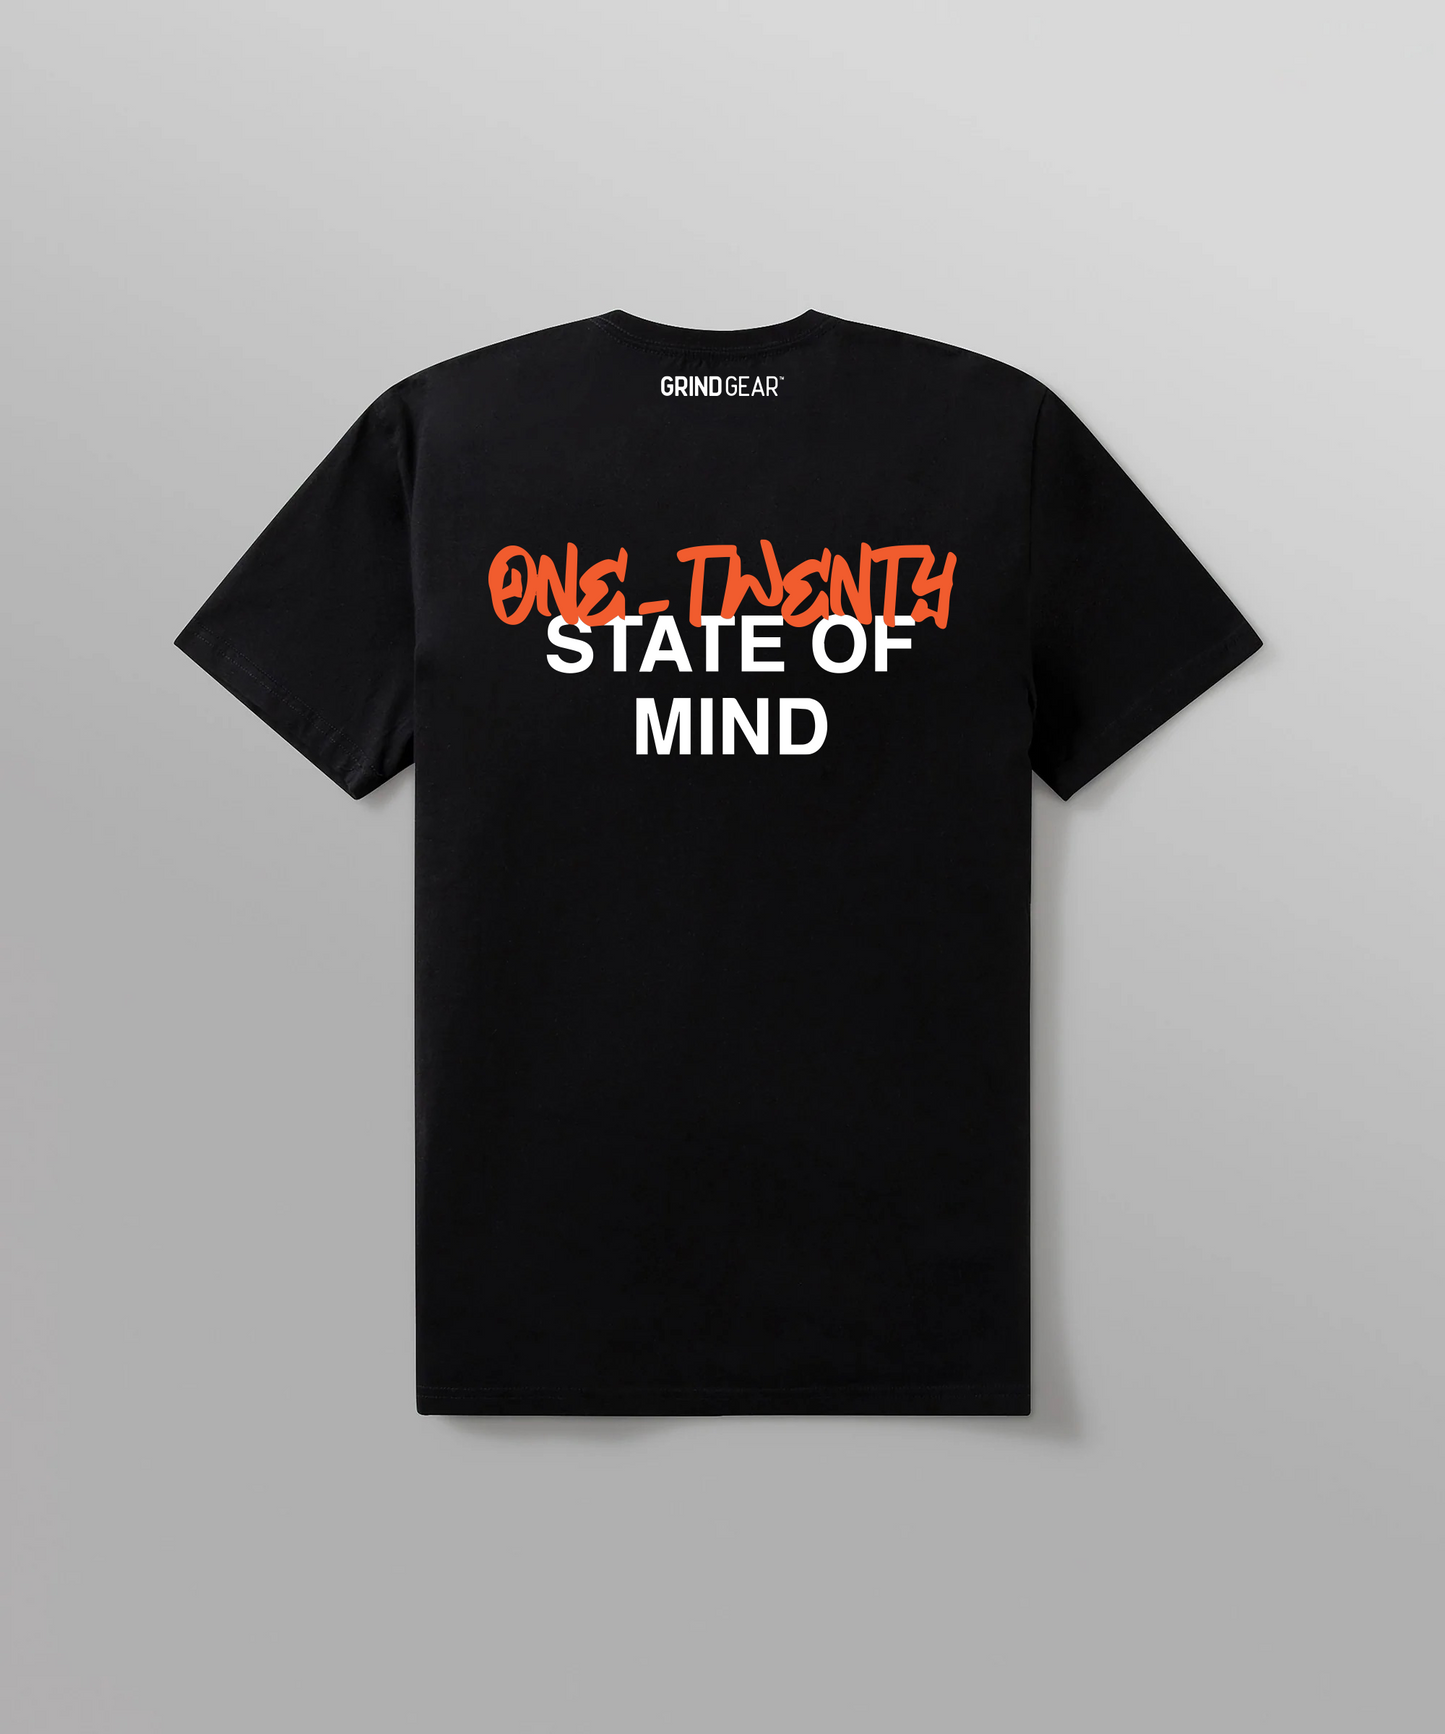 One-Twenty State of Mind Tee - Black